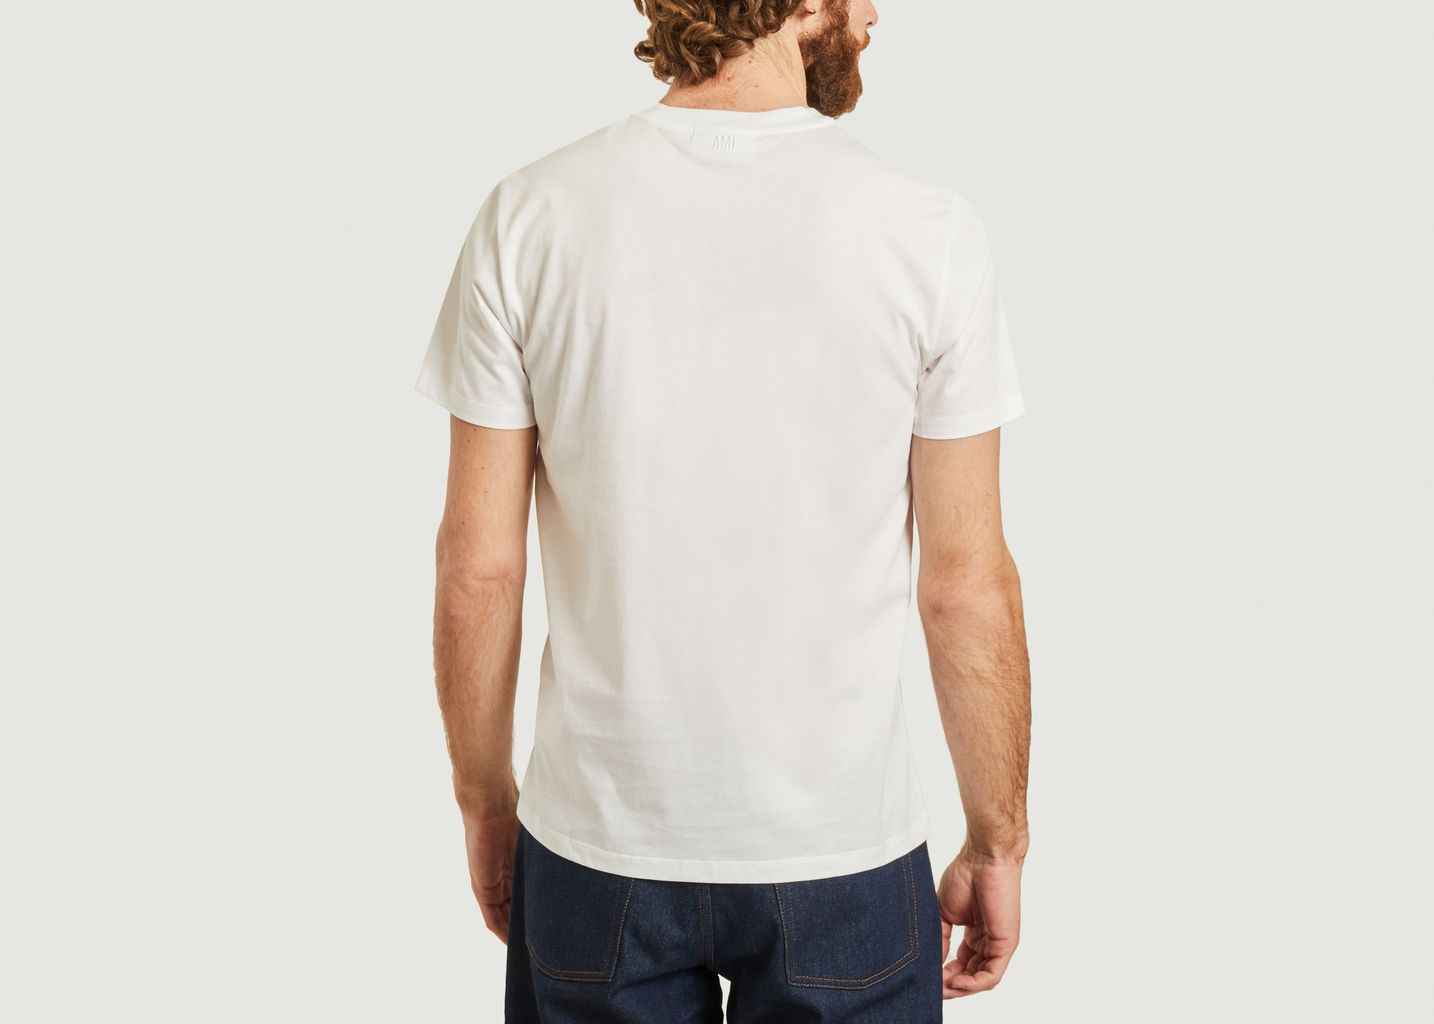 Rabatt 94 % KINDER Hemden & T-Shirts Stickerei Weiß 98 Okaidi T-Shirt 